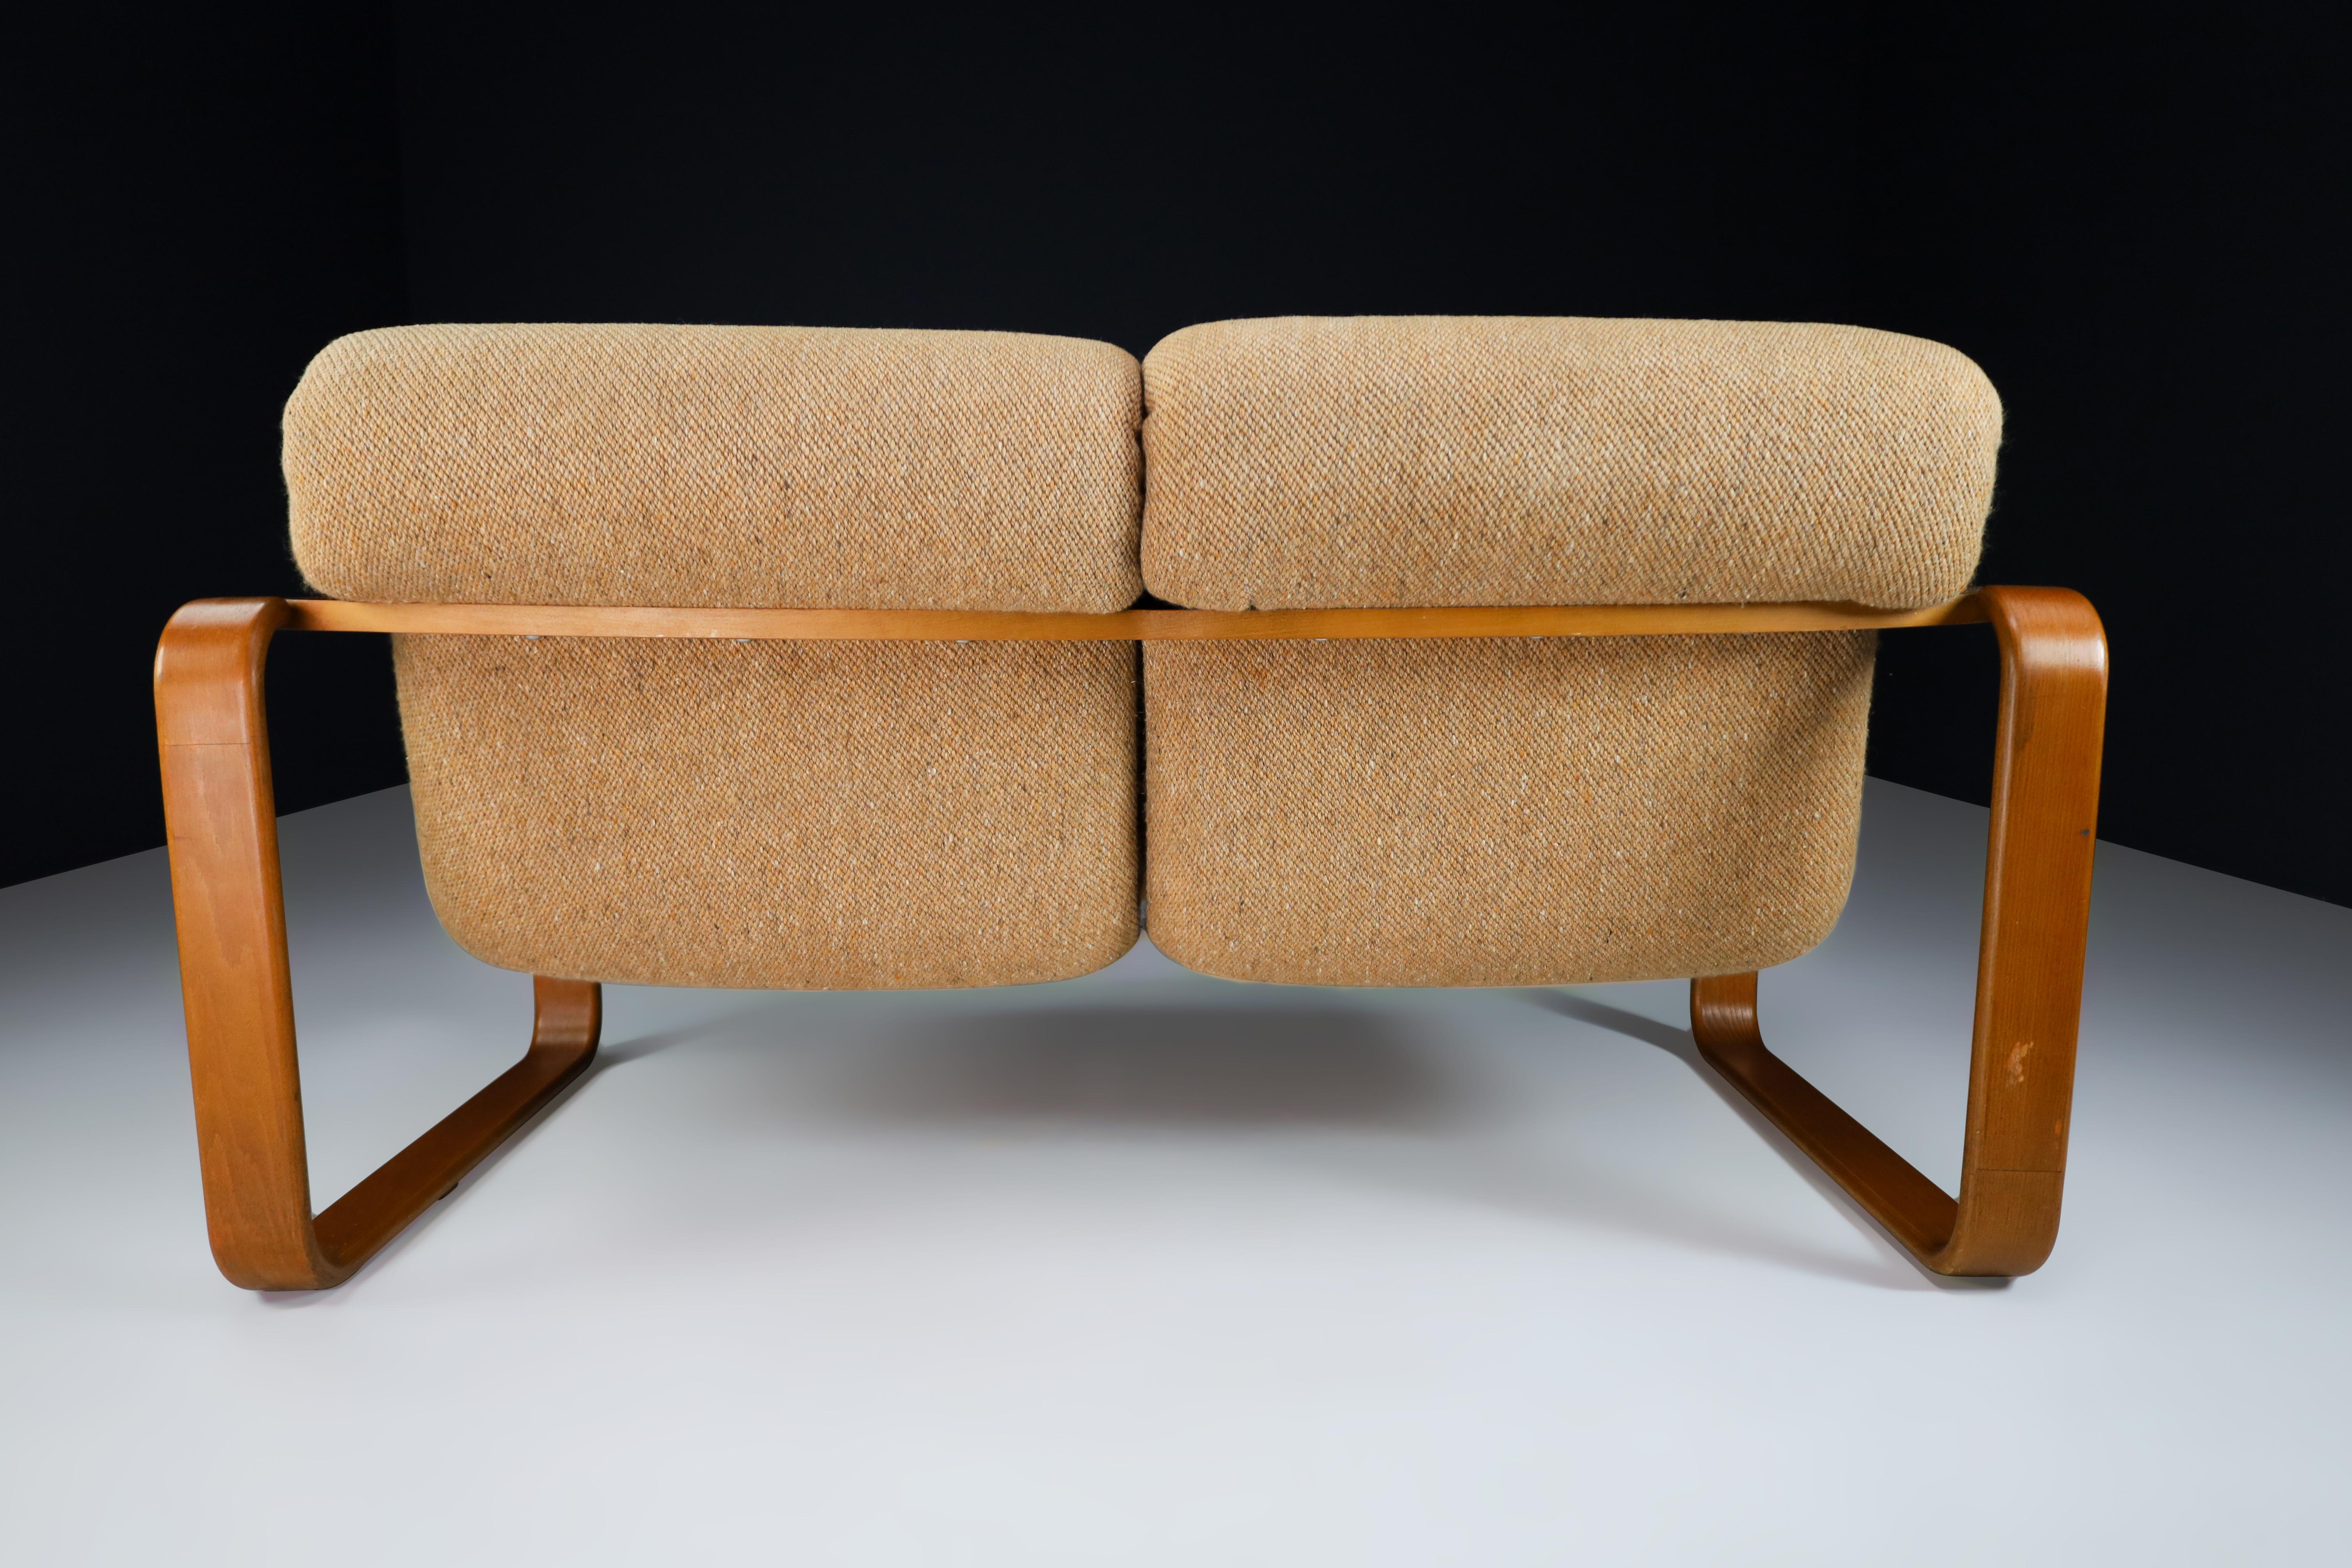 20th Century Jan Bočan Bentwood Two Seat Sofa in Original Jute Fabric 1960s For Sale